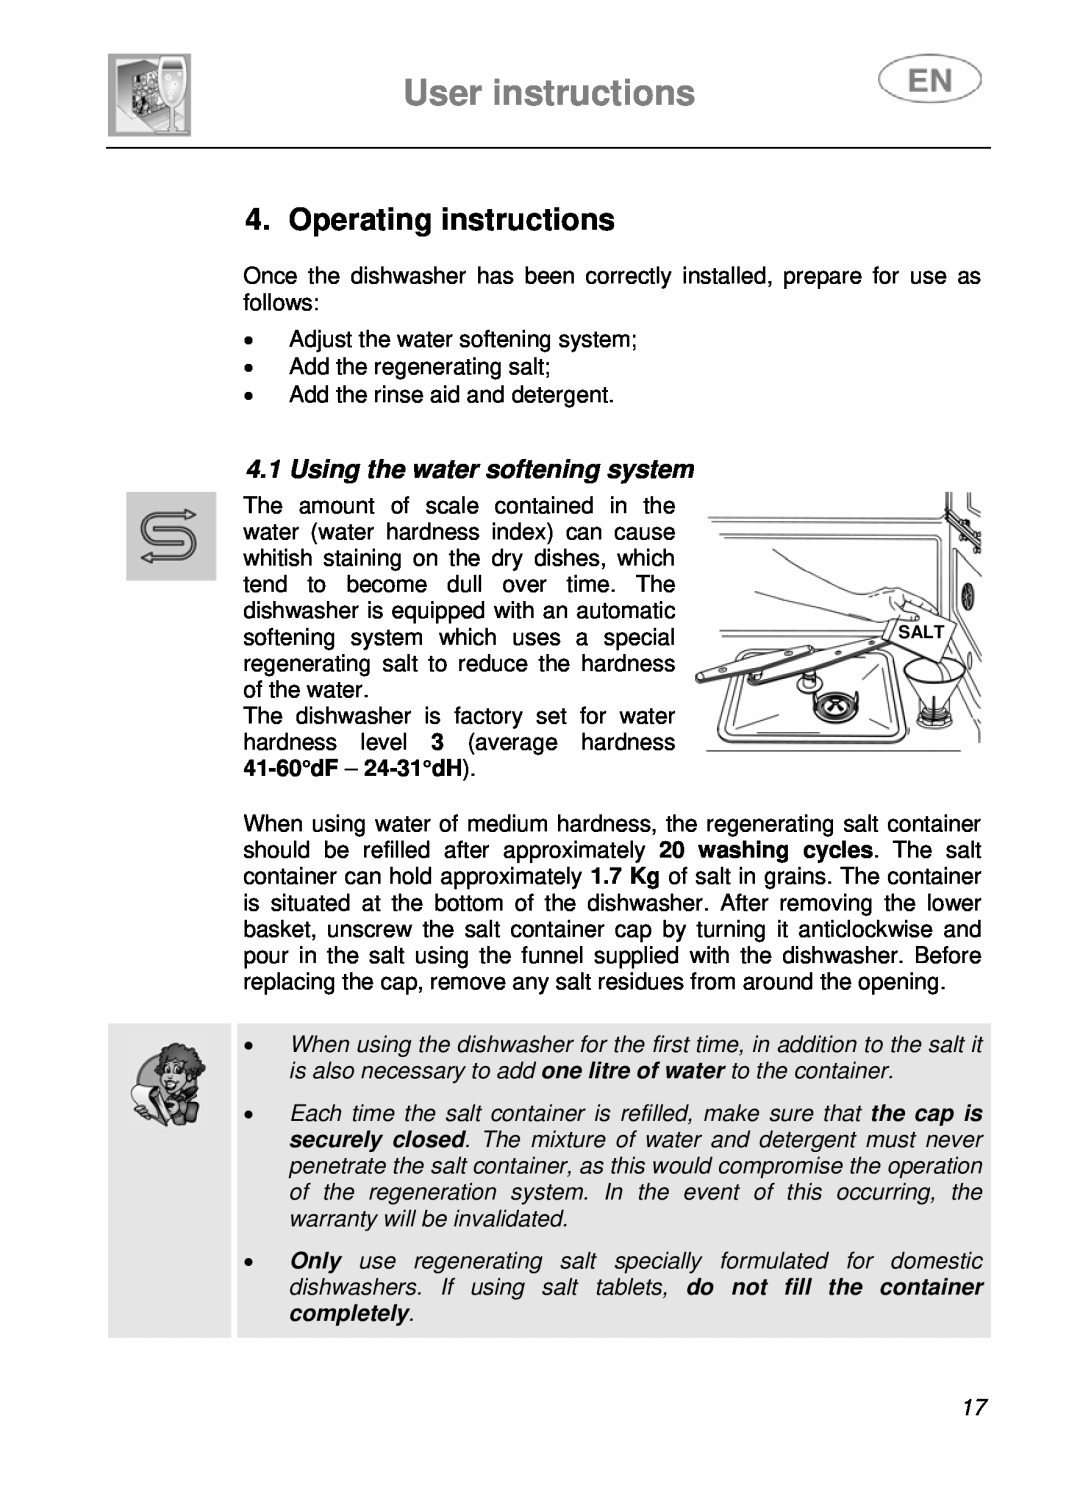 Smeg LVS1449B instruction manual Operating instructions, User instructions, Using the water softening system 